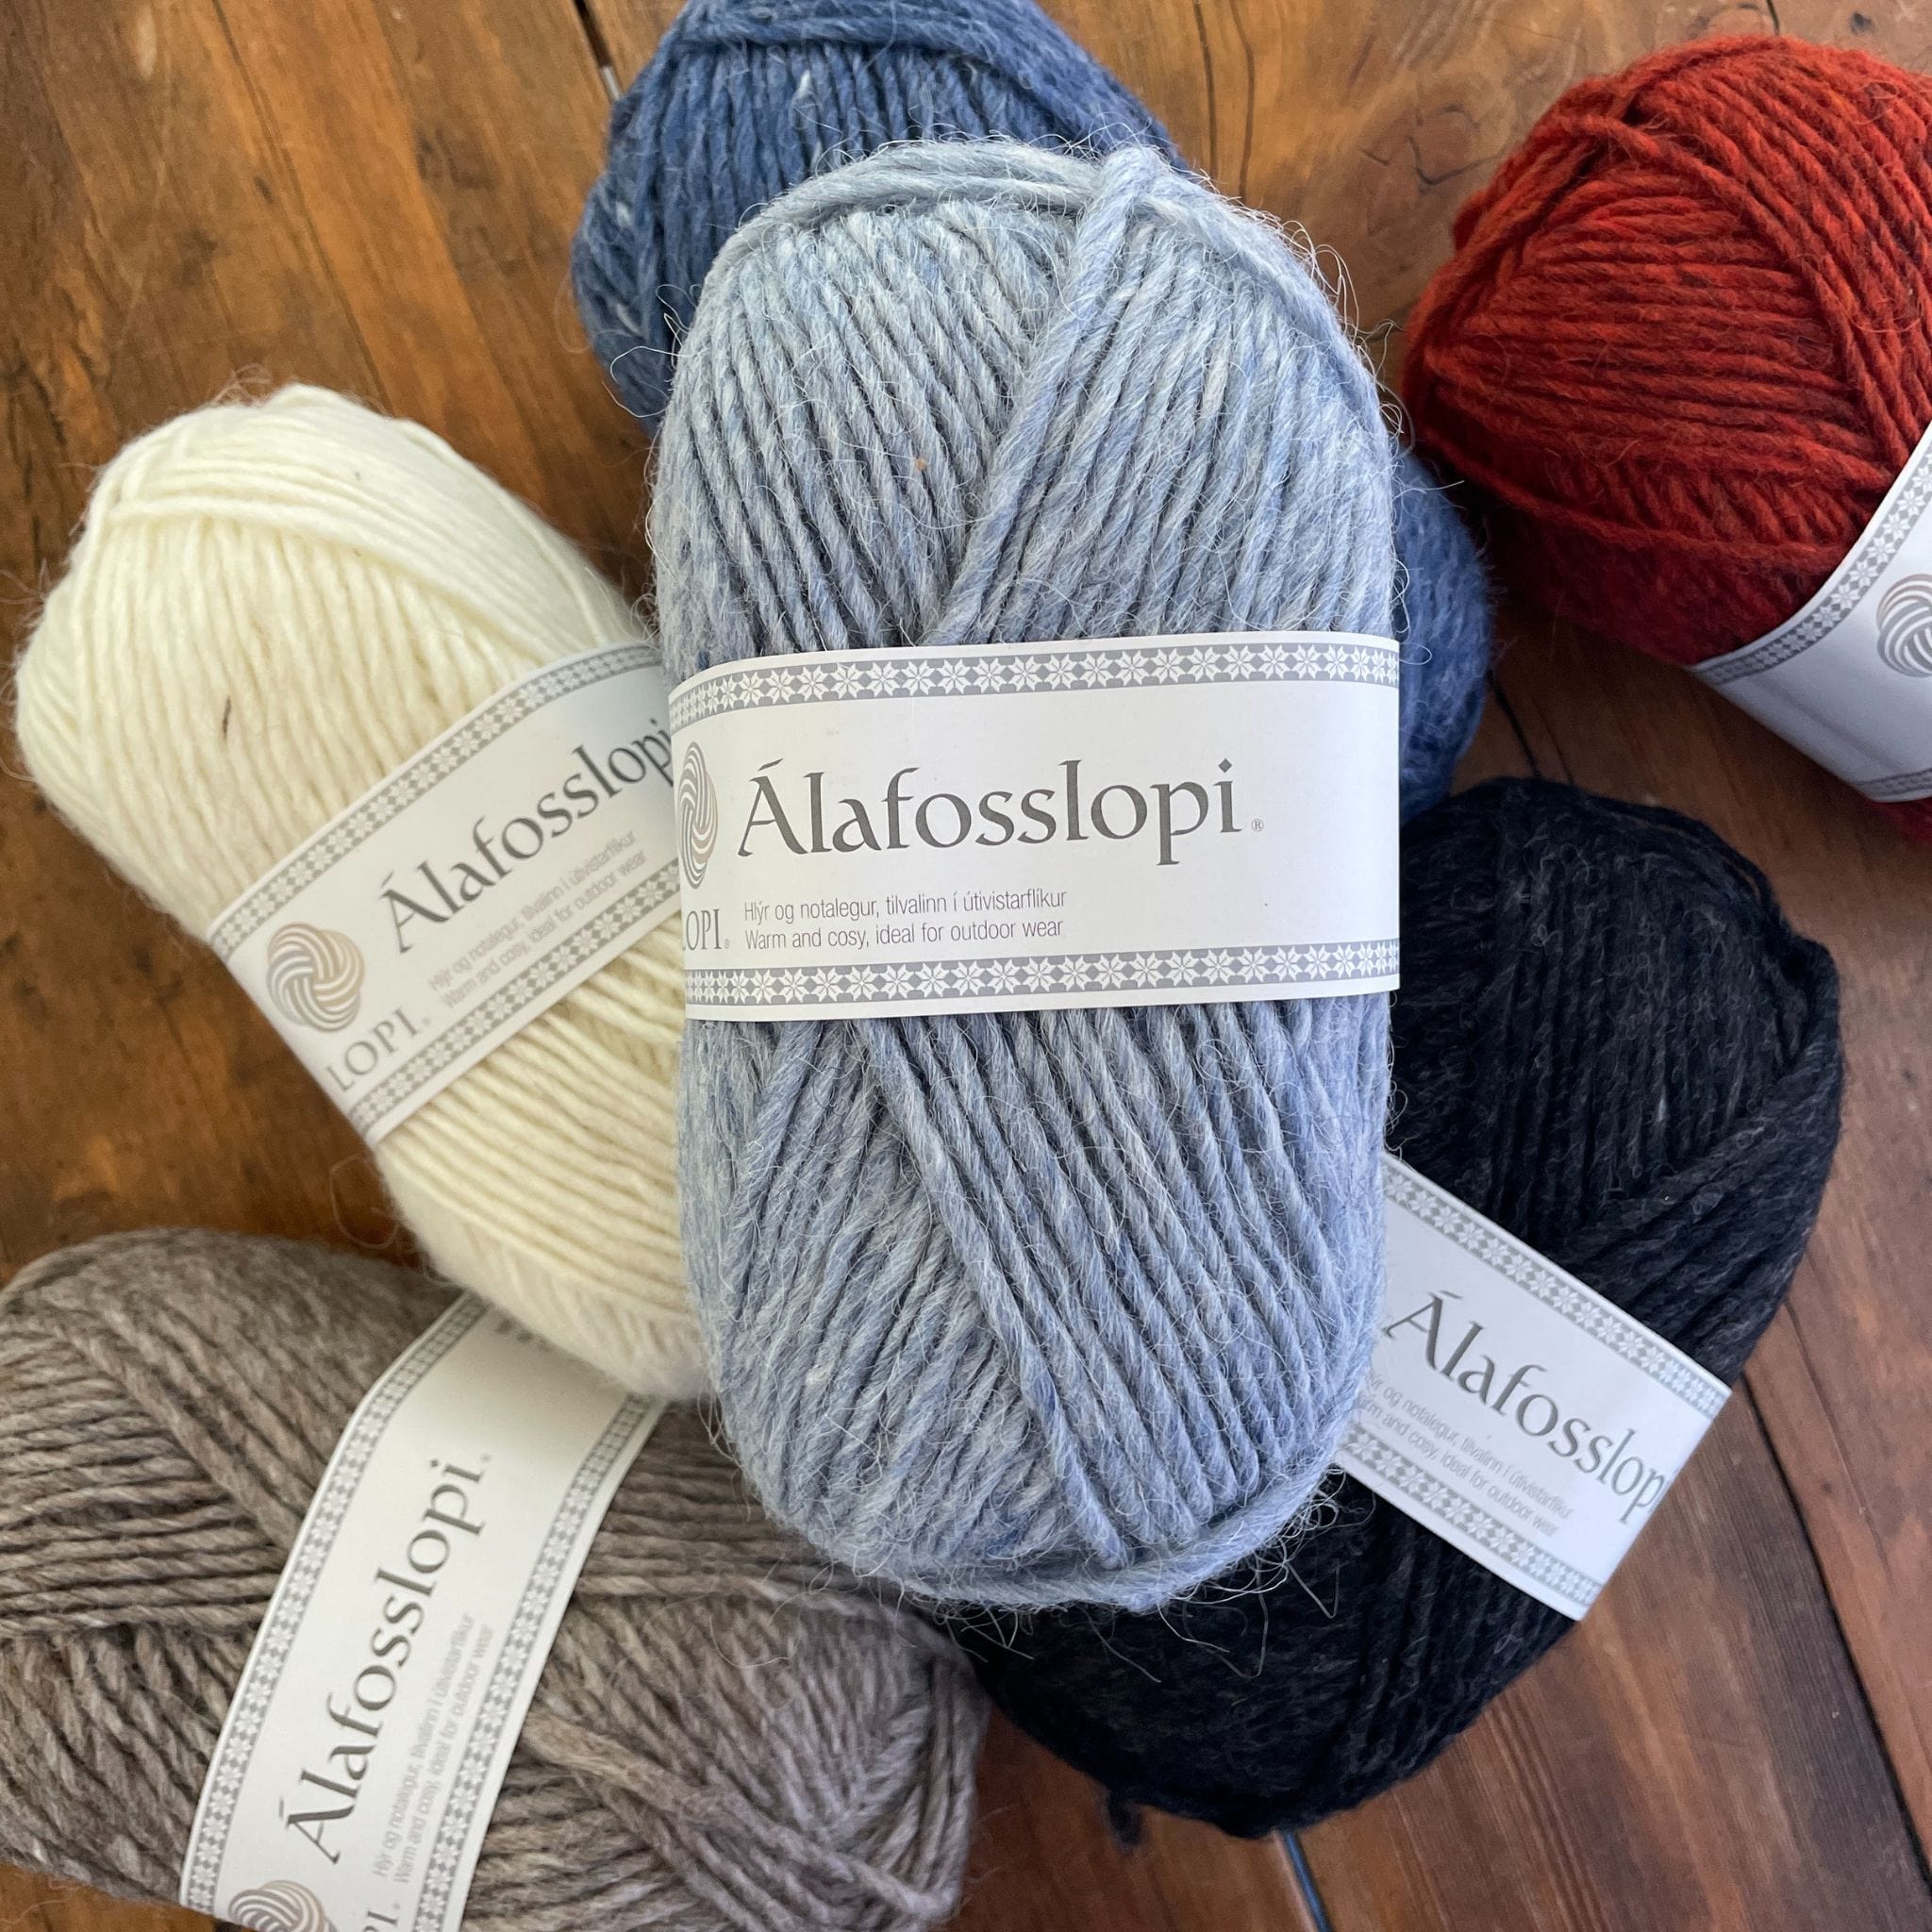 forsøg Claire tilstødende Álafosslopi Yarn – The Woolly Thistle